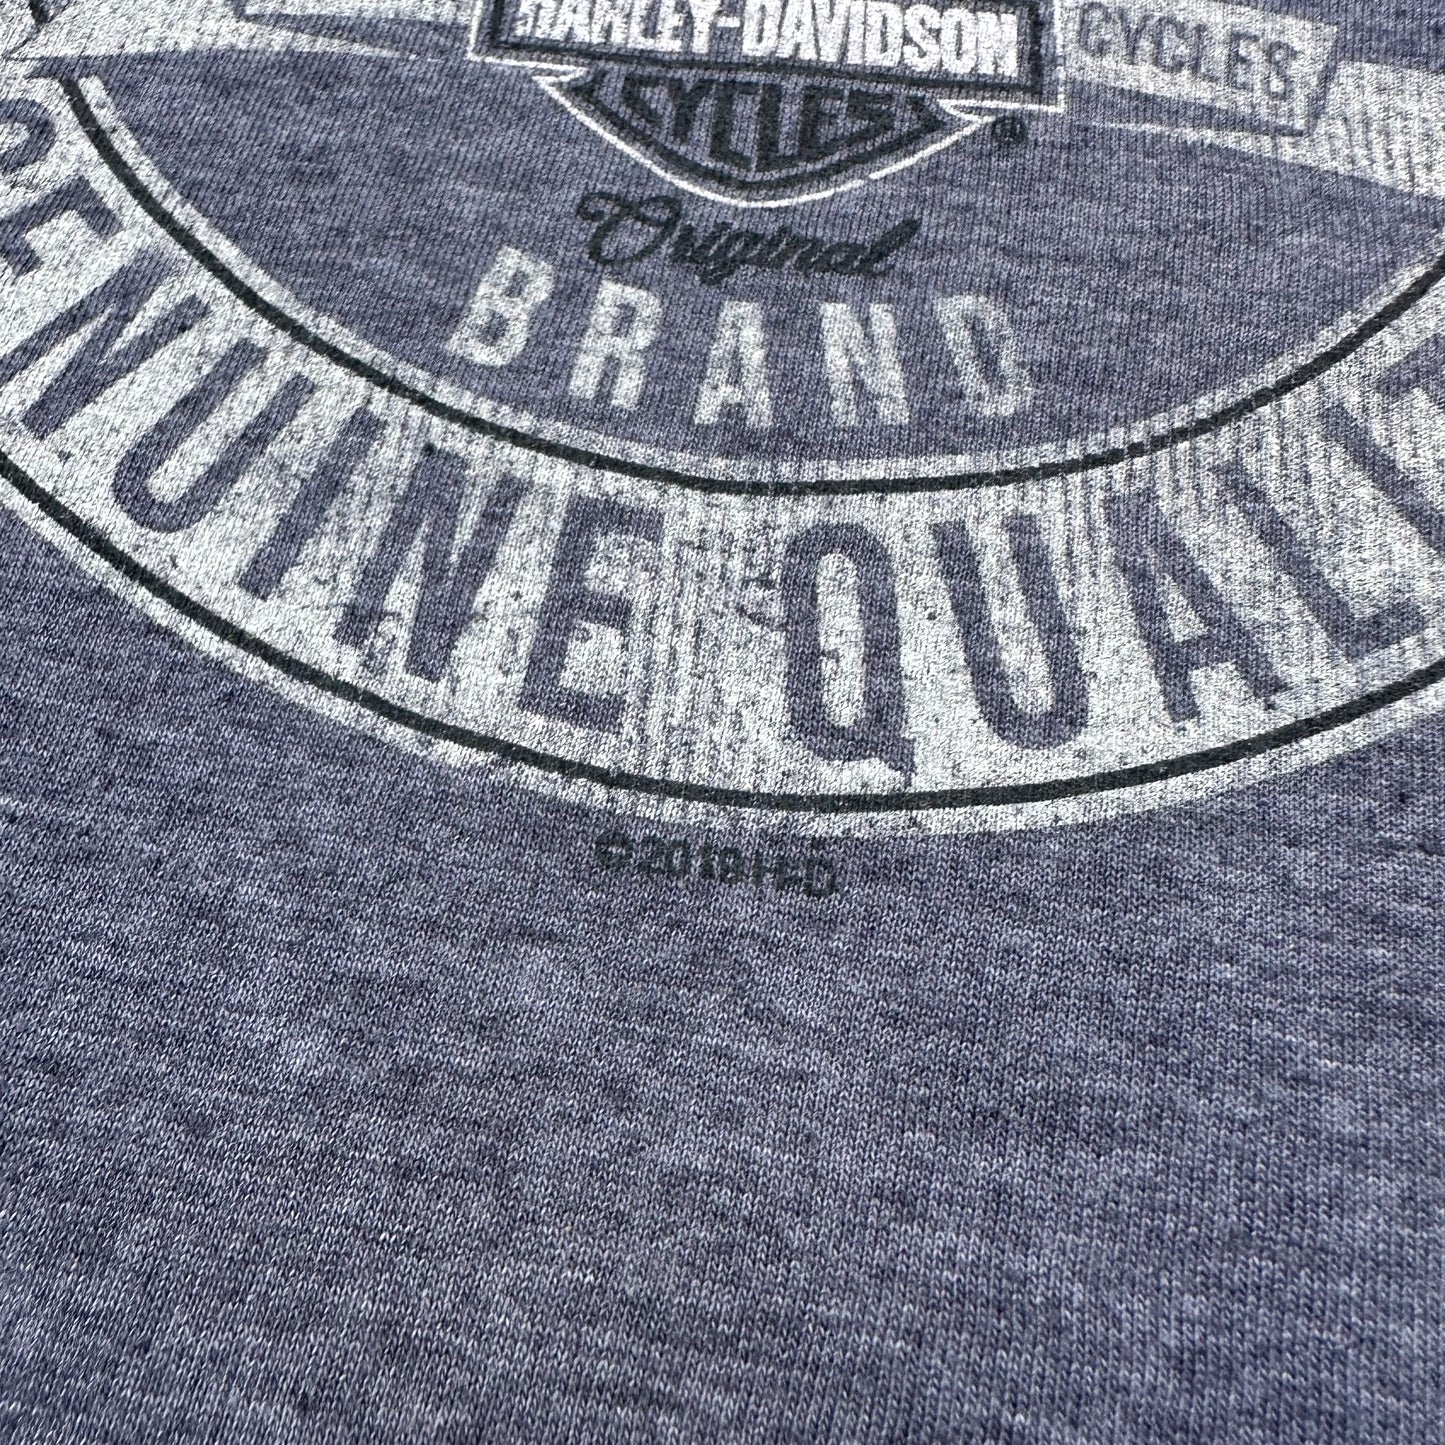 Harley Davidson Oklahoma Army T Shirt 2019 - XL